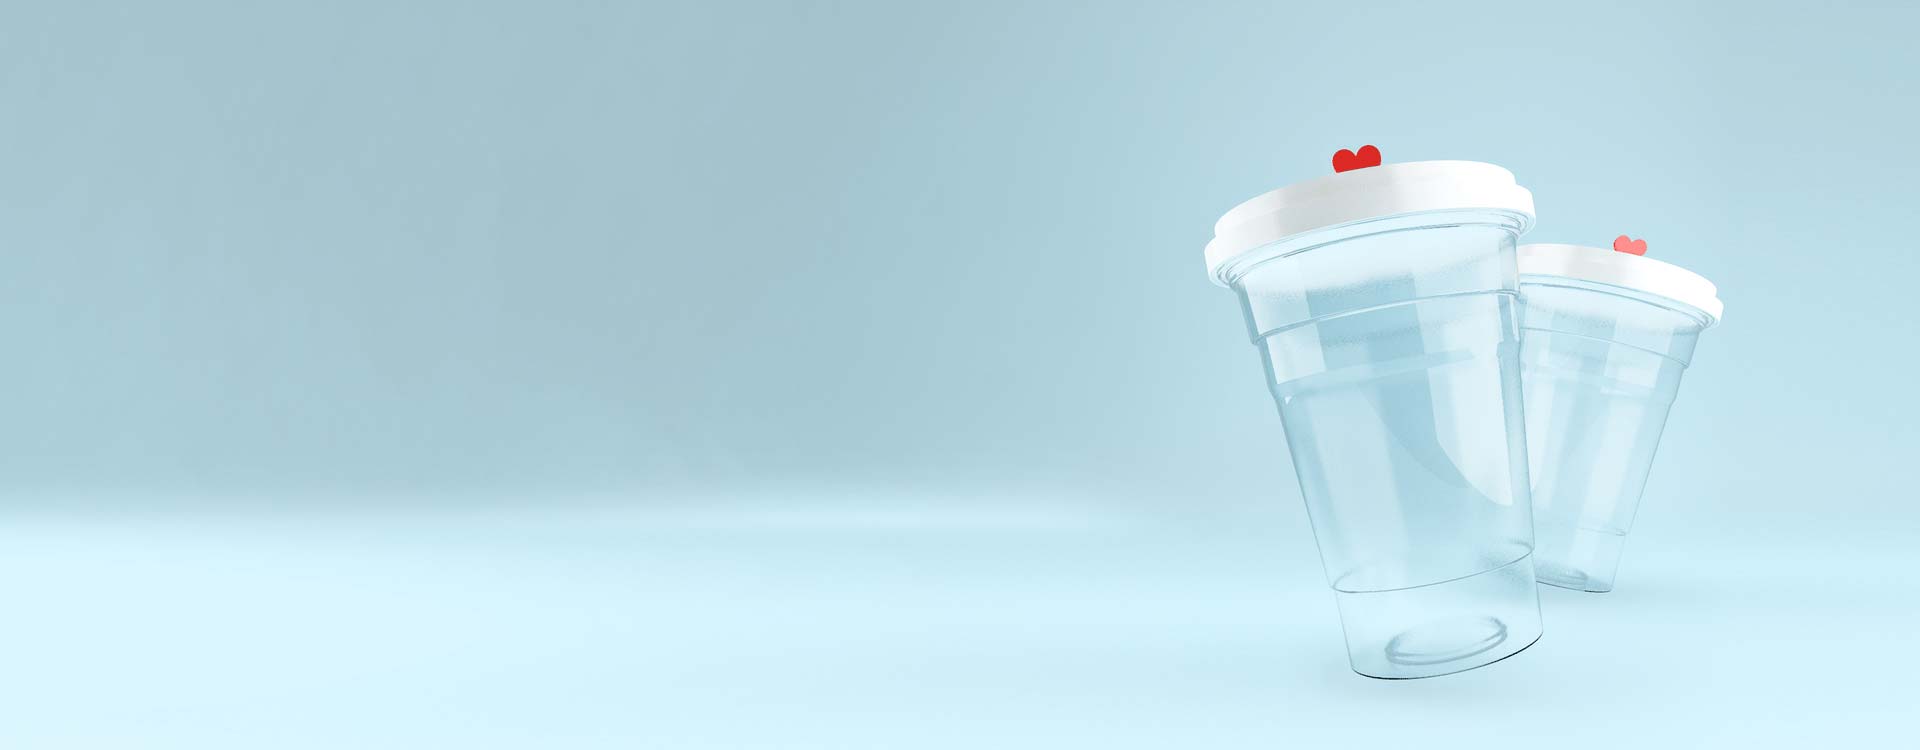 Wholesale Disposable Hot Drink Cups Supplier & Factory - Lesui